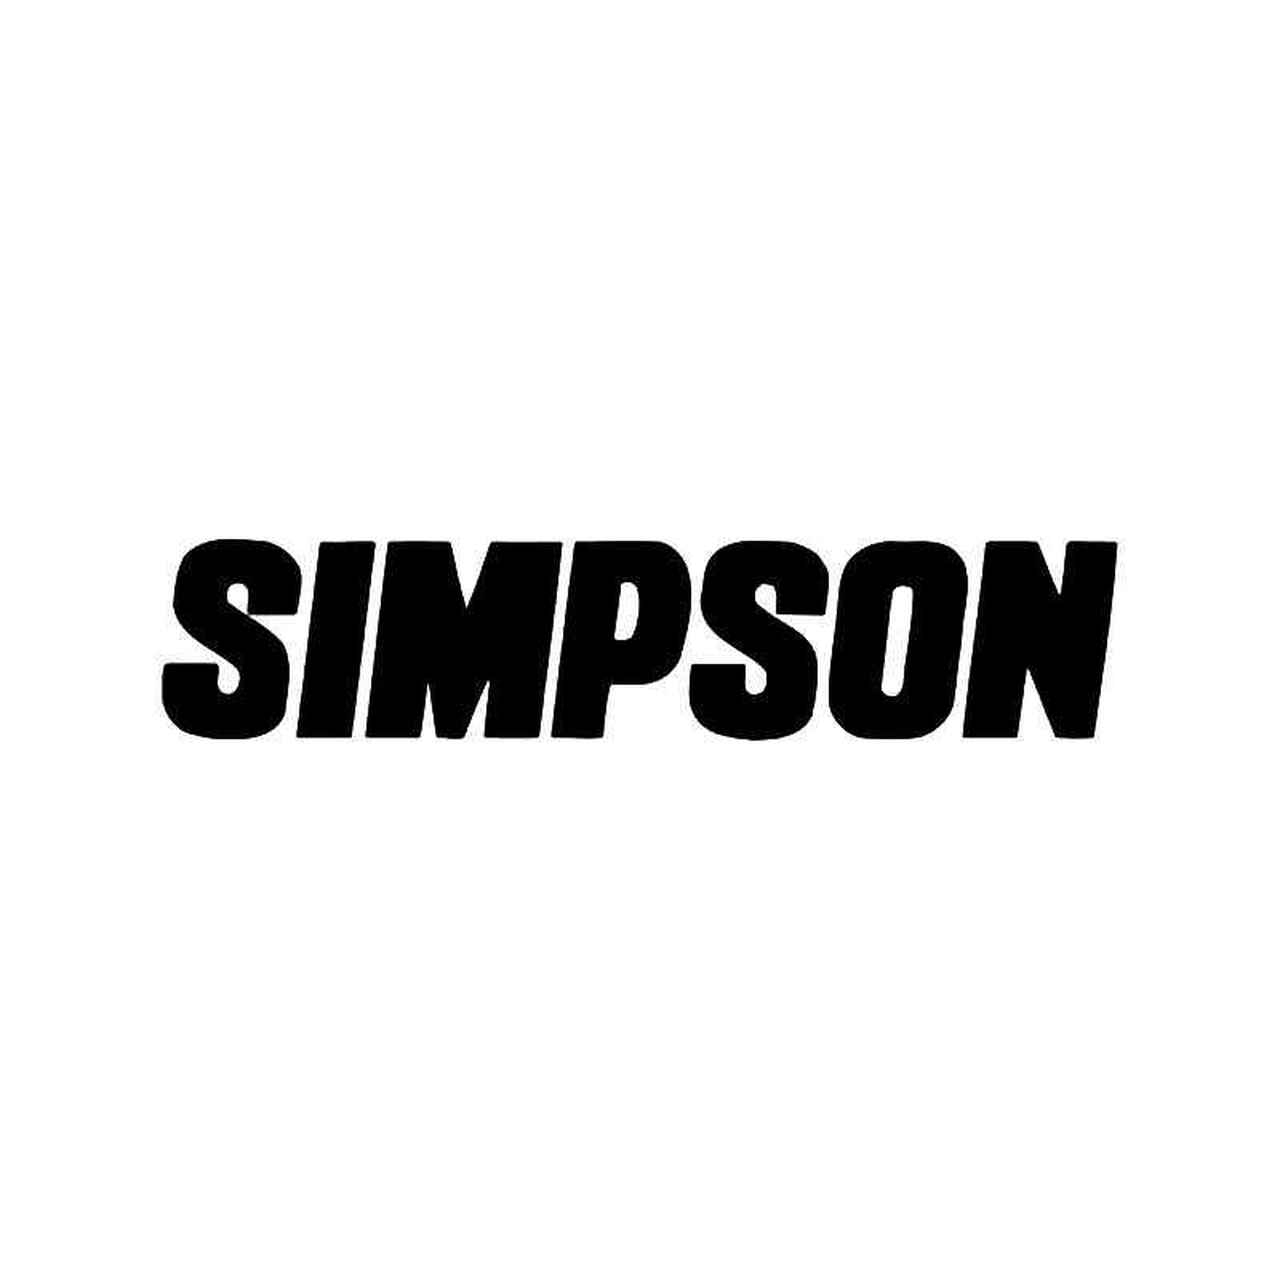 Simpson Logo - Simpson Logo 1 Vinyl Sticker